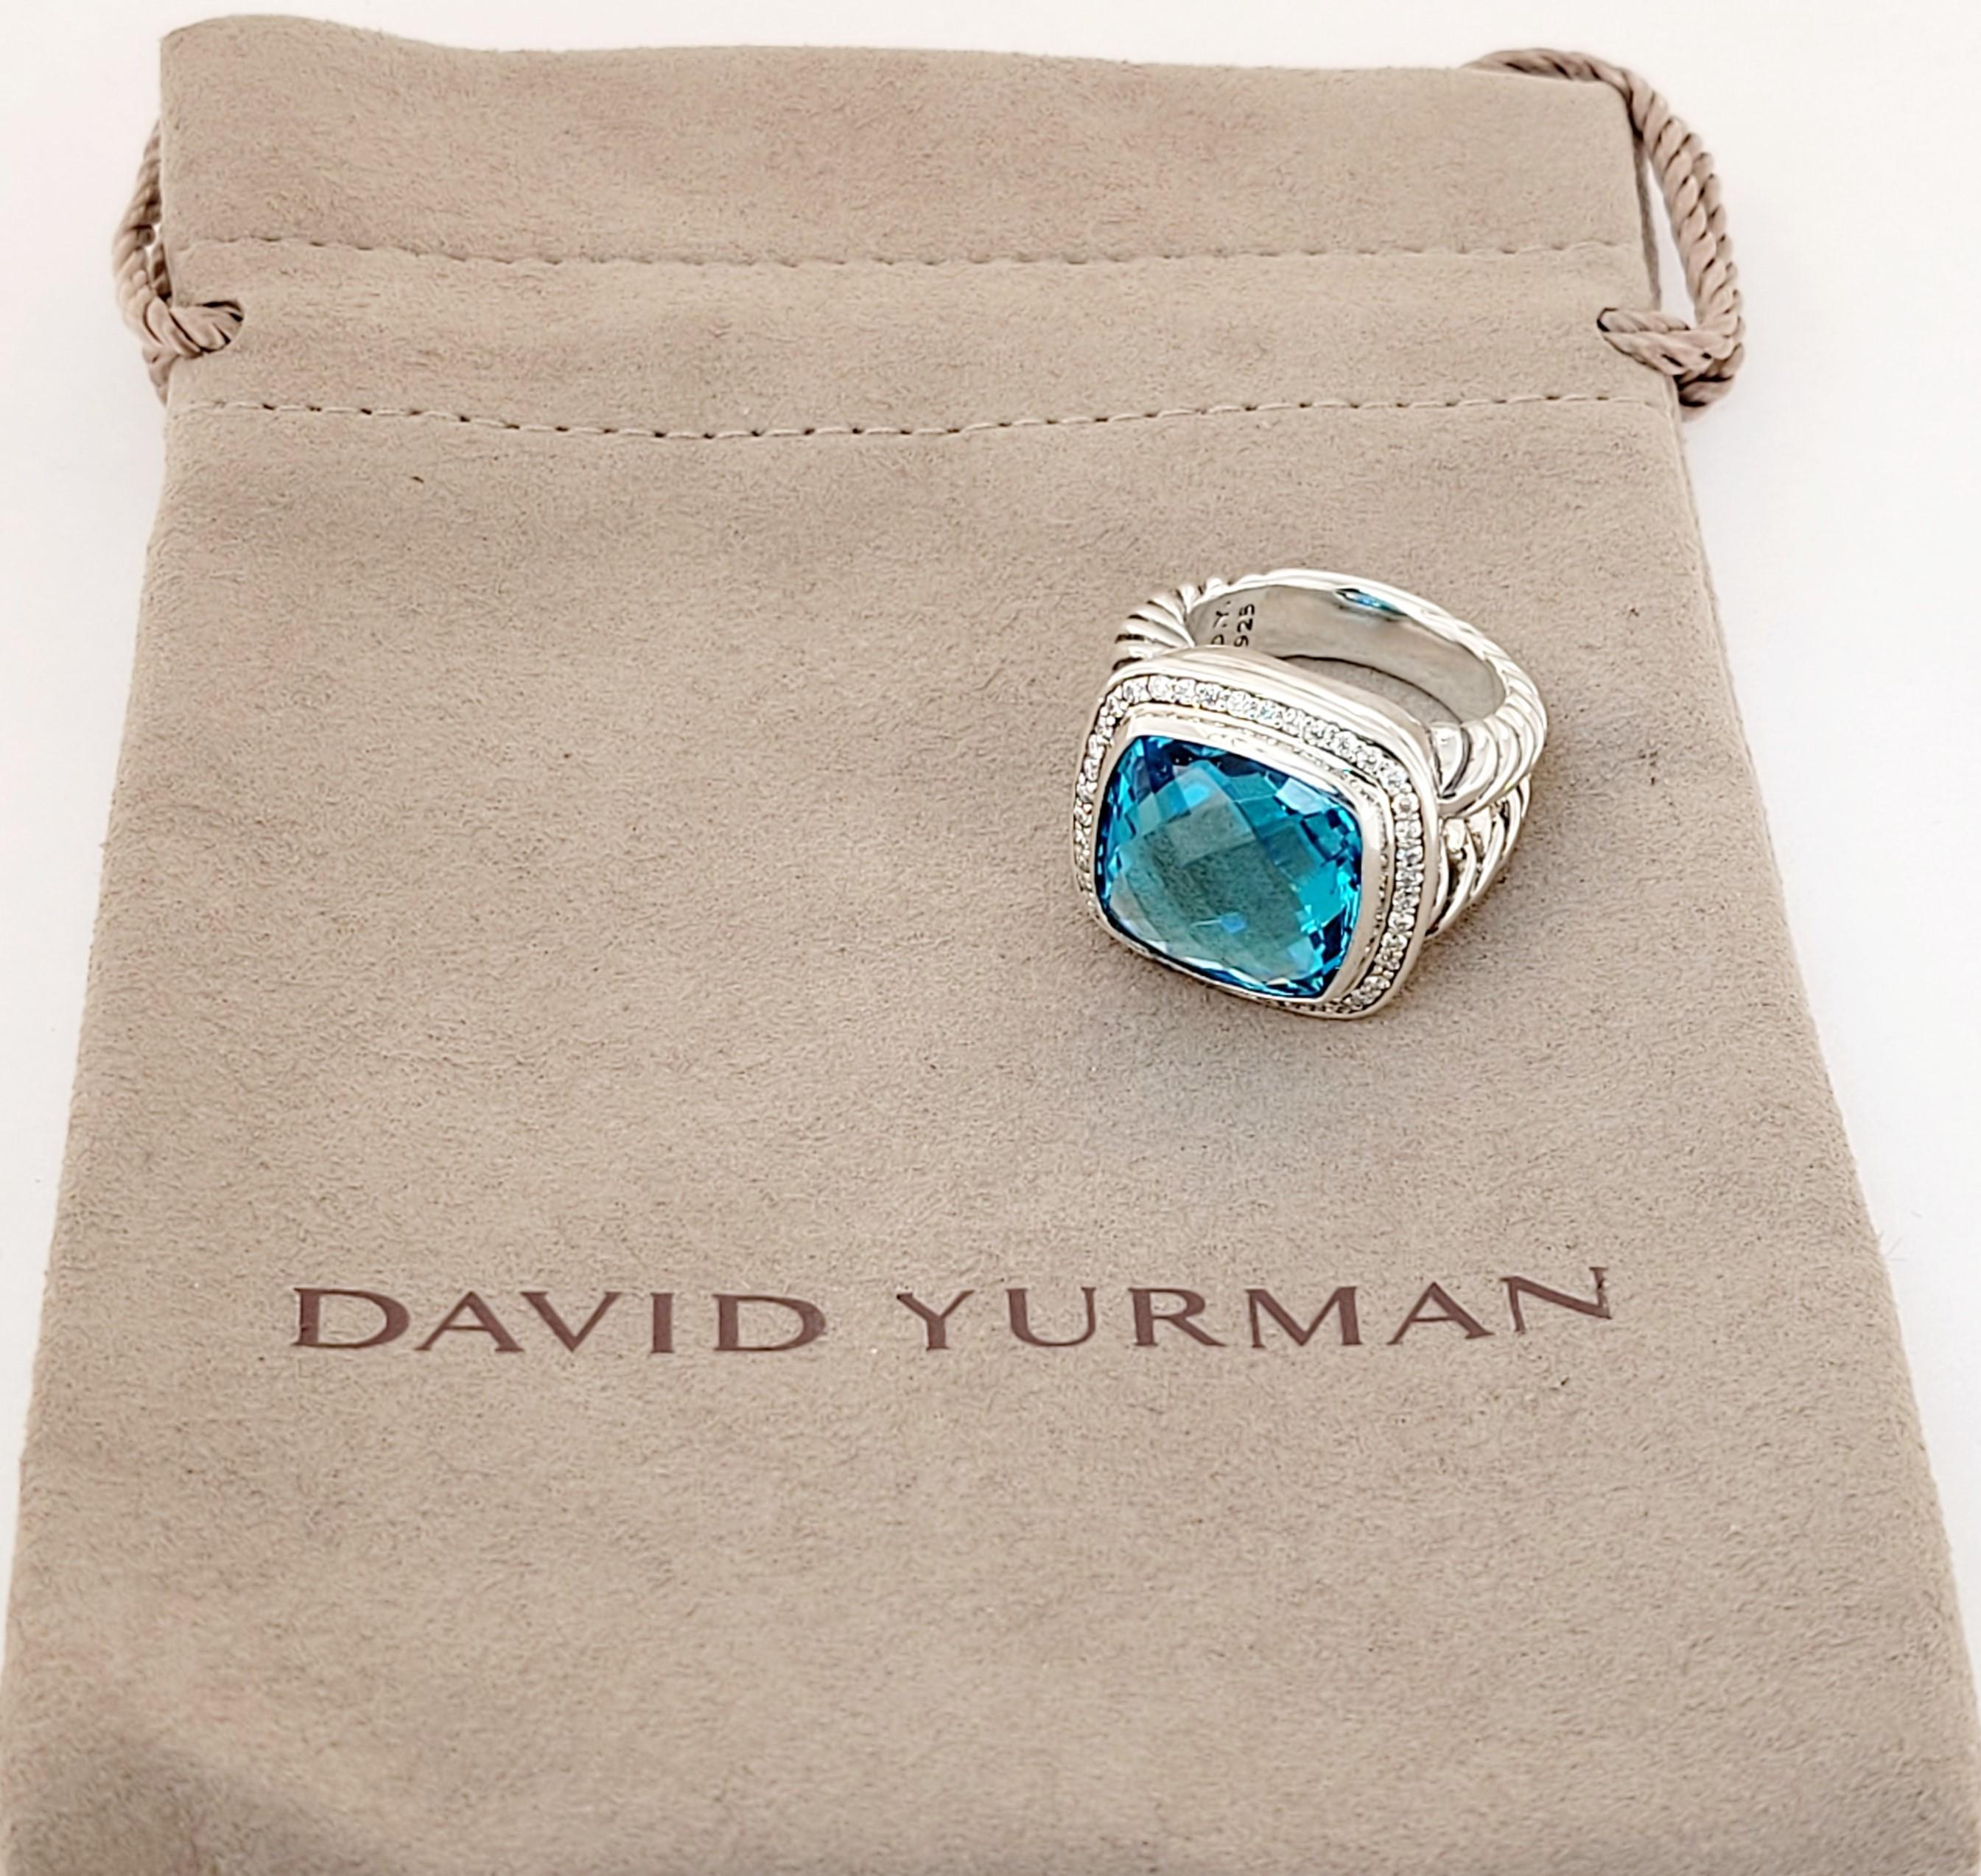 David yurman ring blue topas with diamond Size 6.75 1